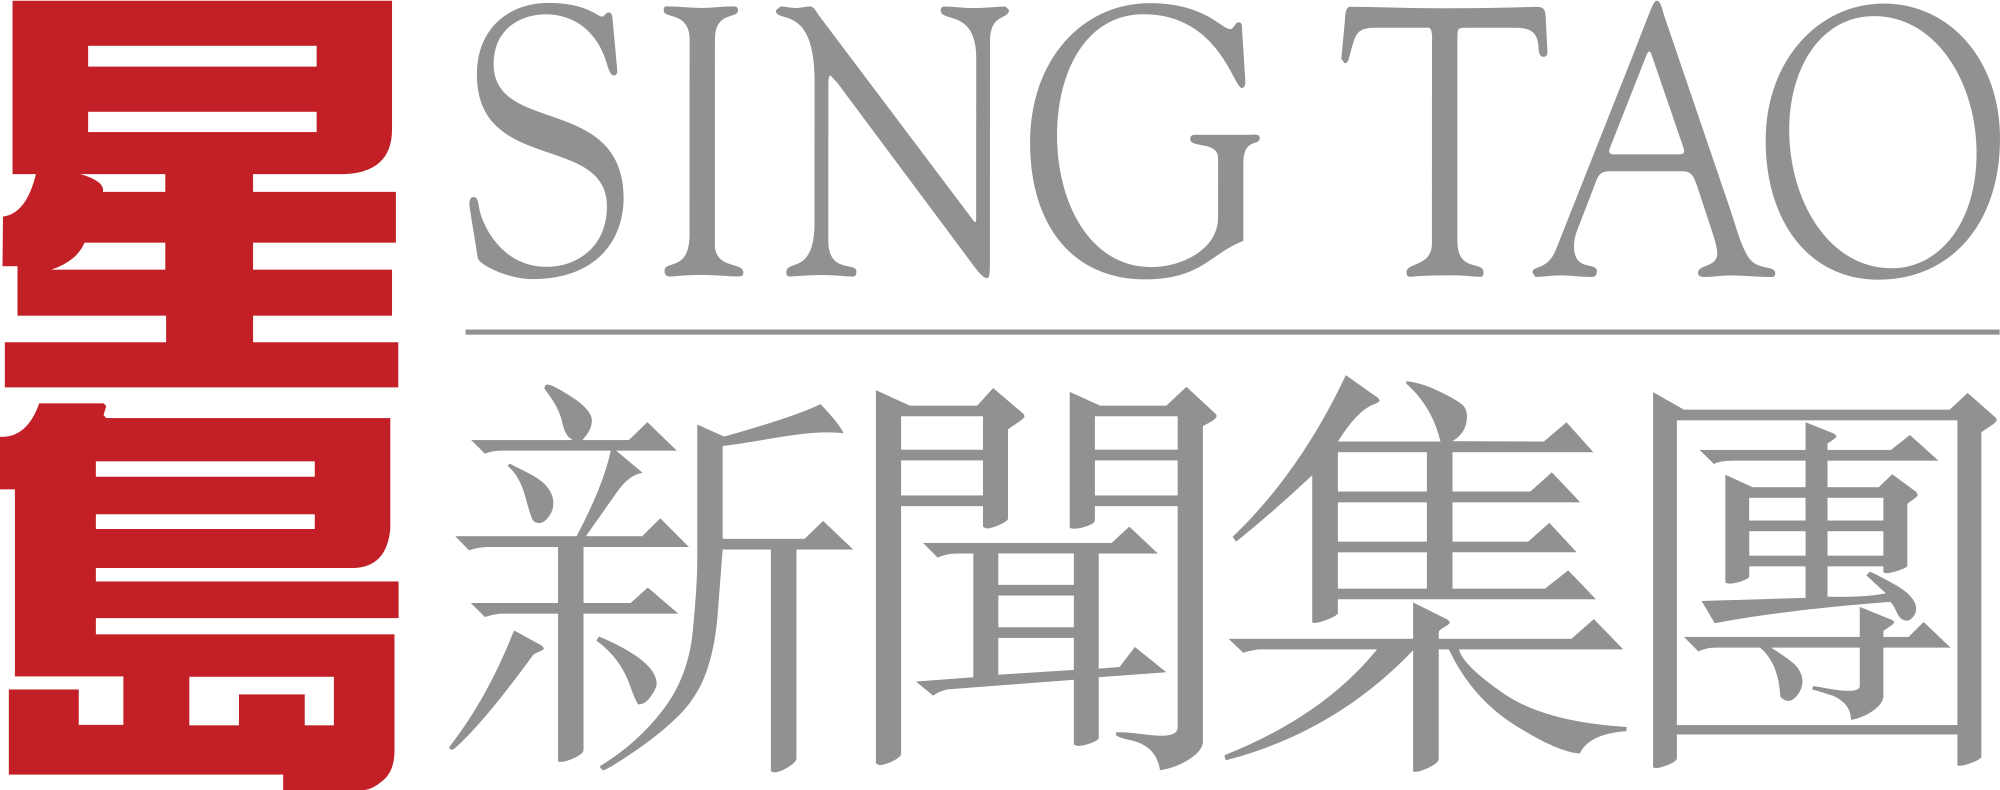 Sing Tao News Corporation – App Development for Digital Product (2010, HK)